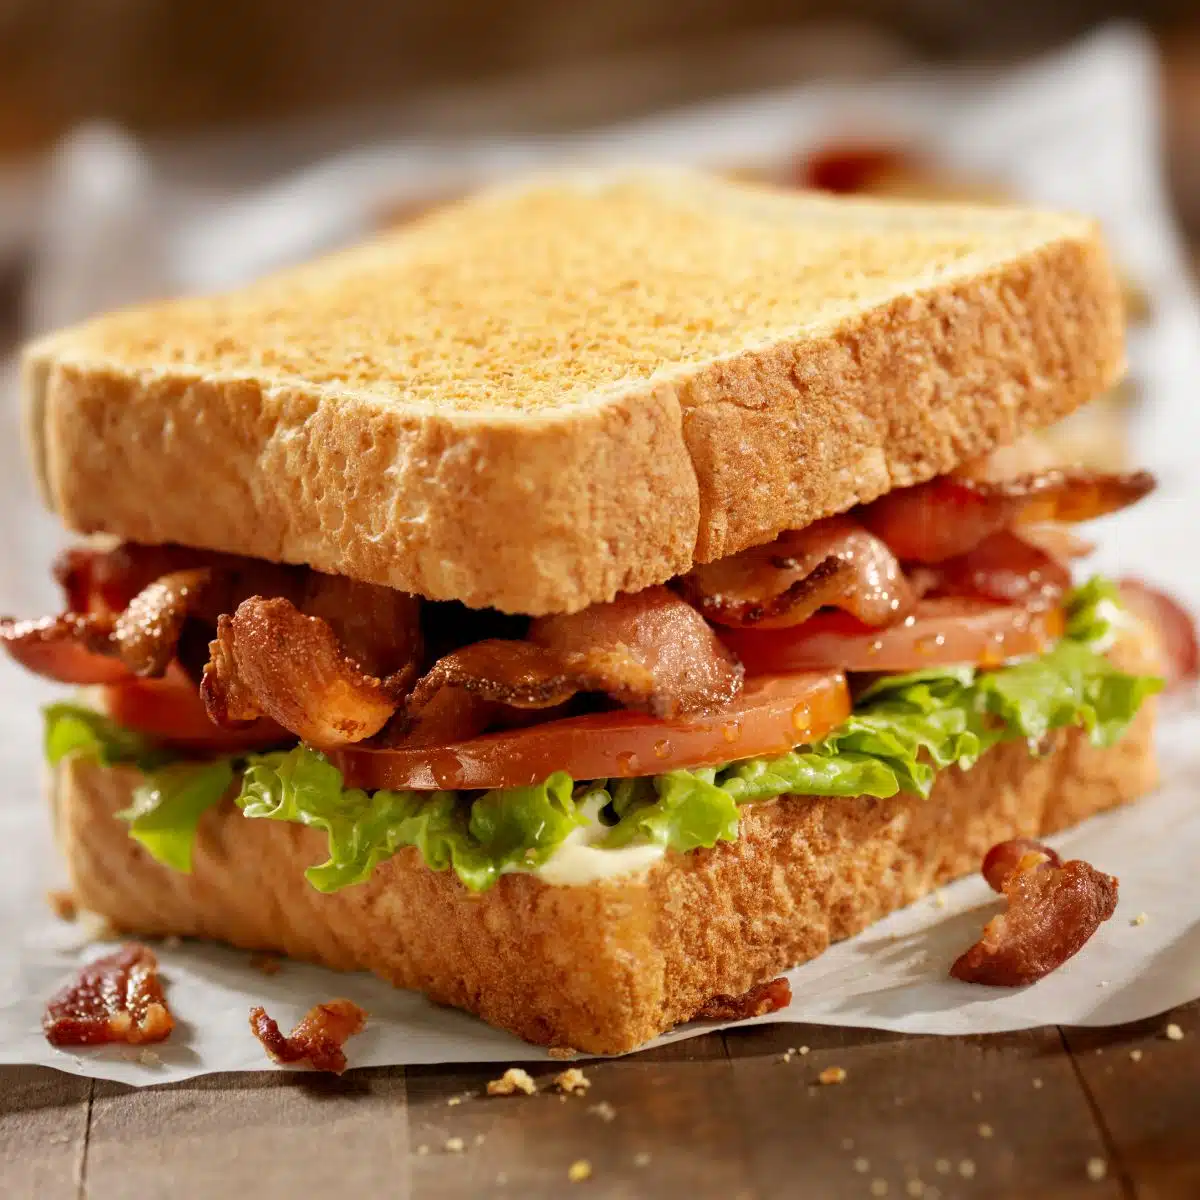 Gambar persegi menampilkan sandwich BLT klasik.